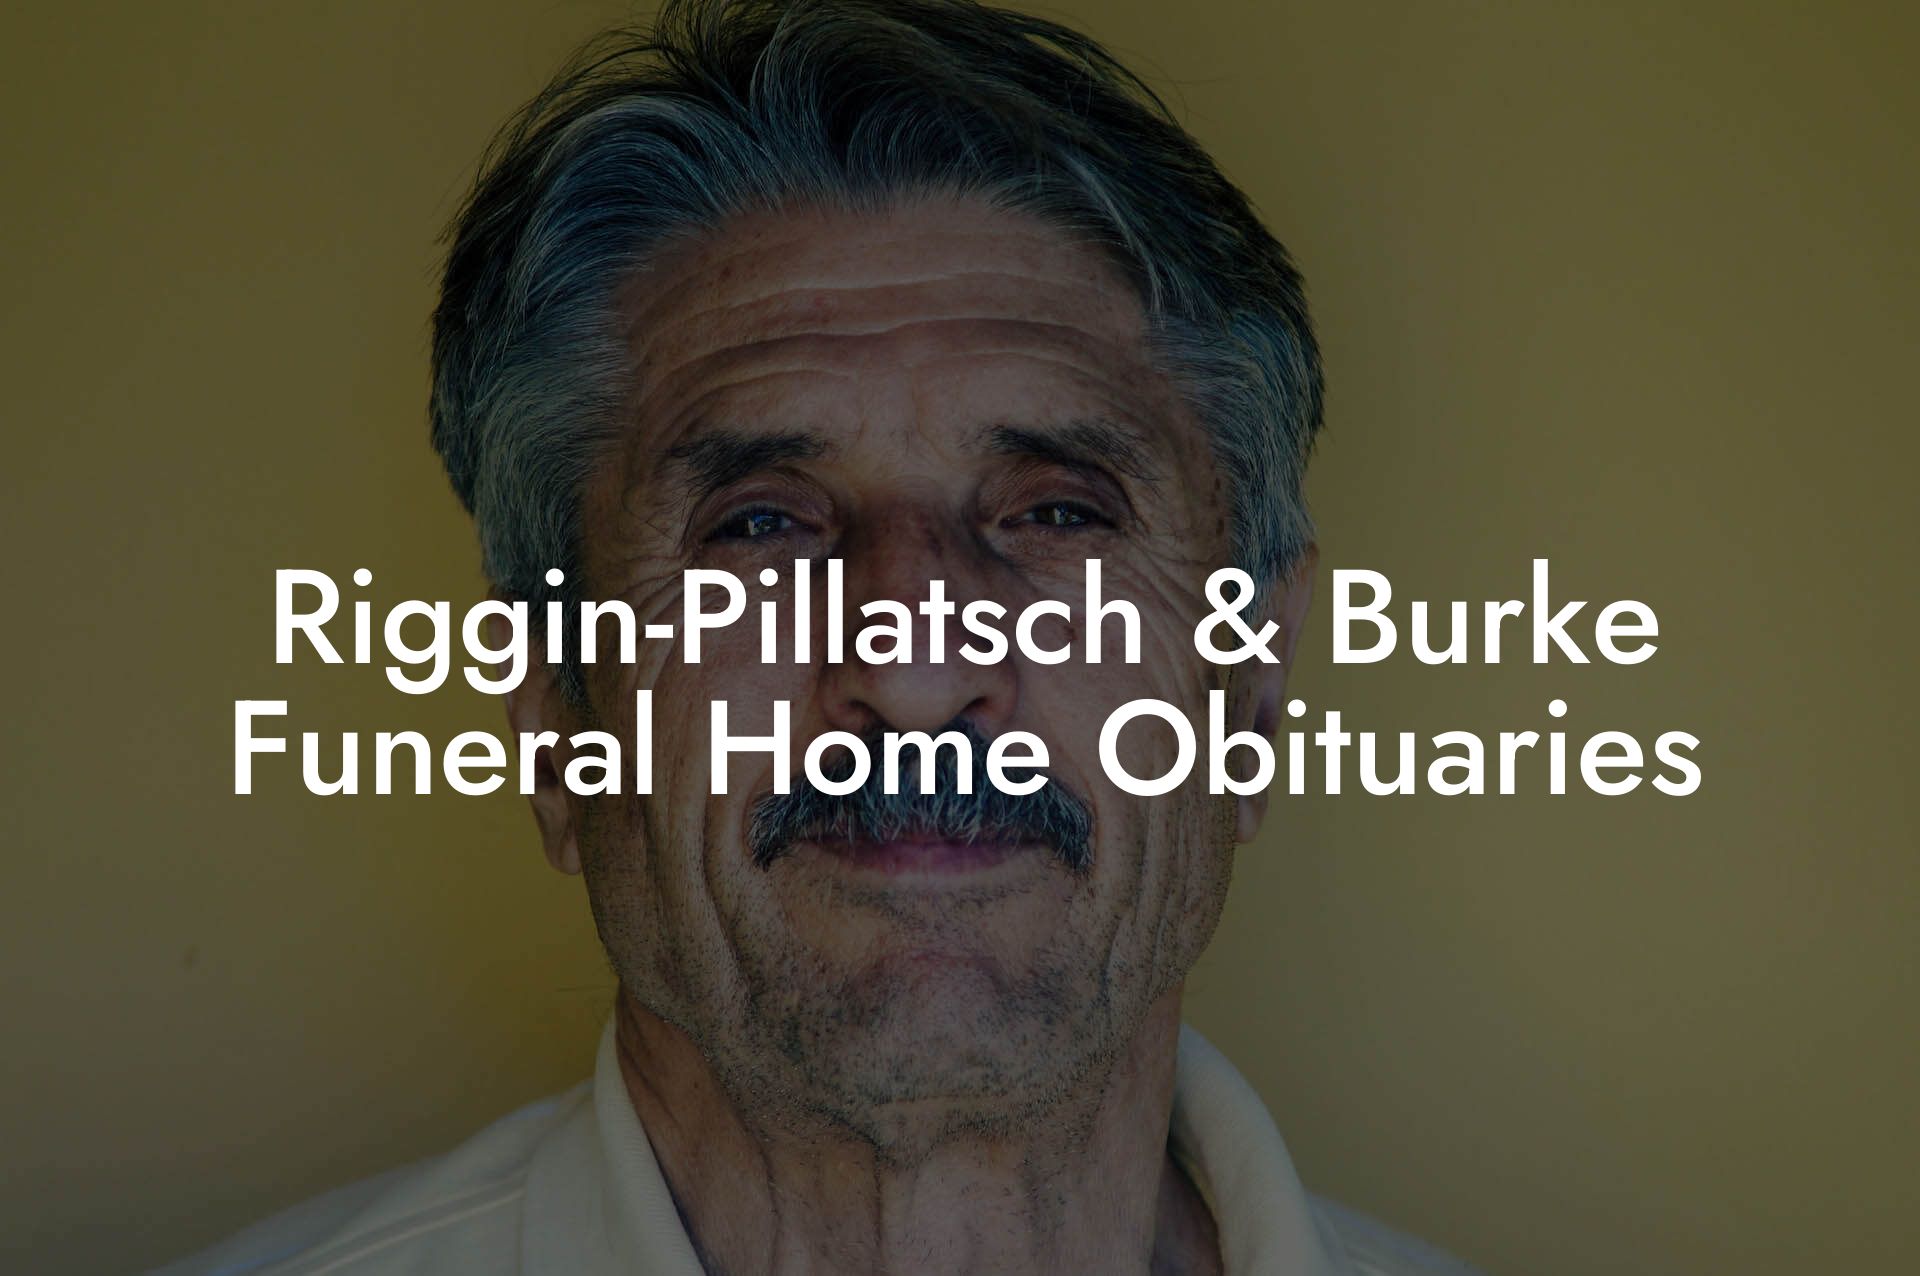 Riggin-Pillatsch & Burke Funeral Home Obituaries